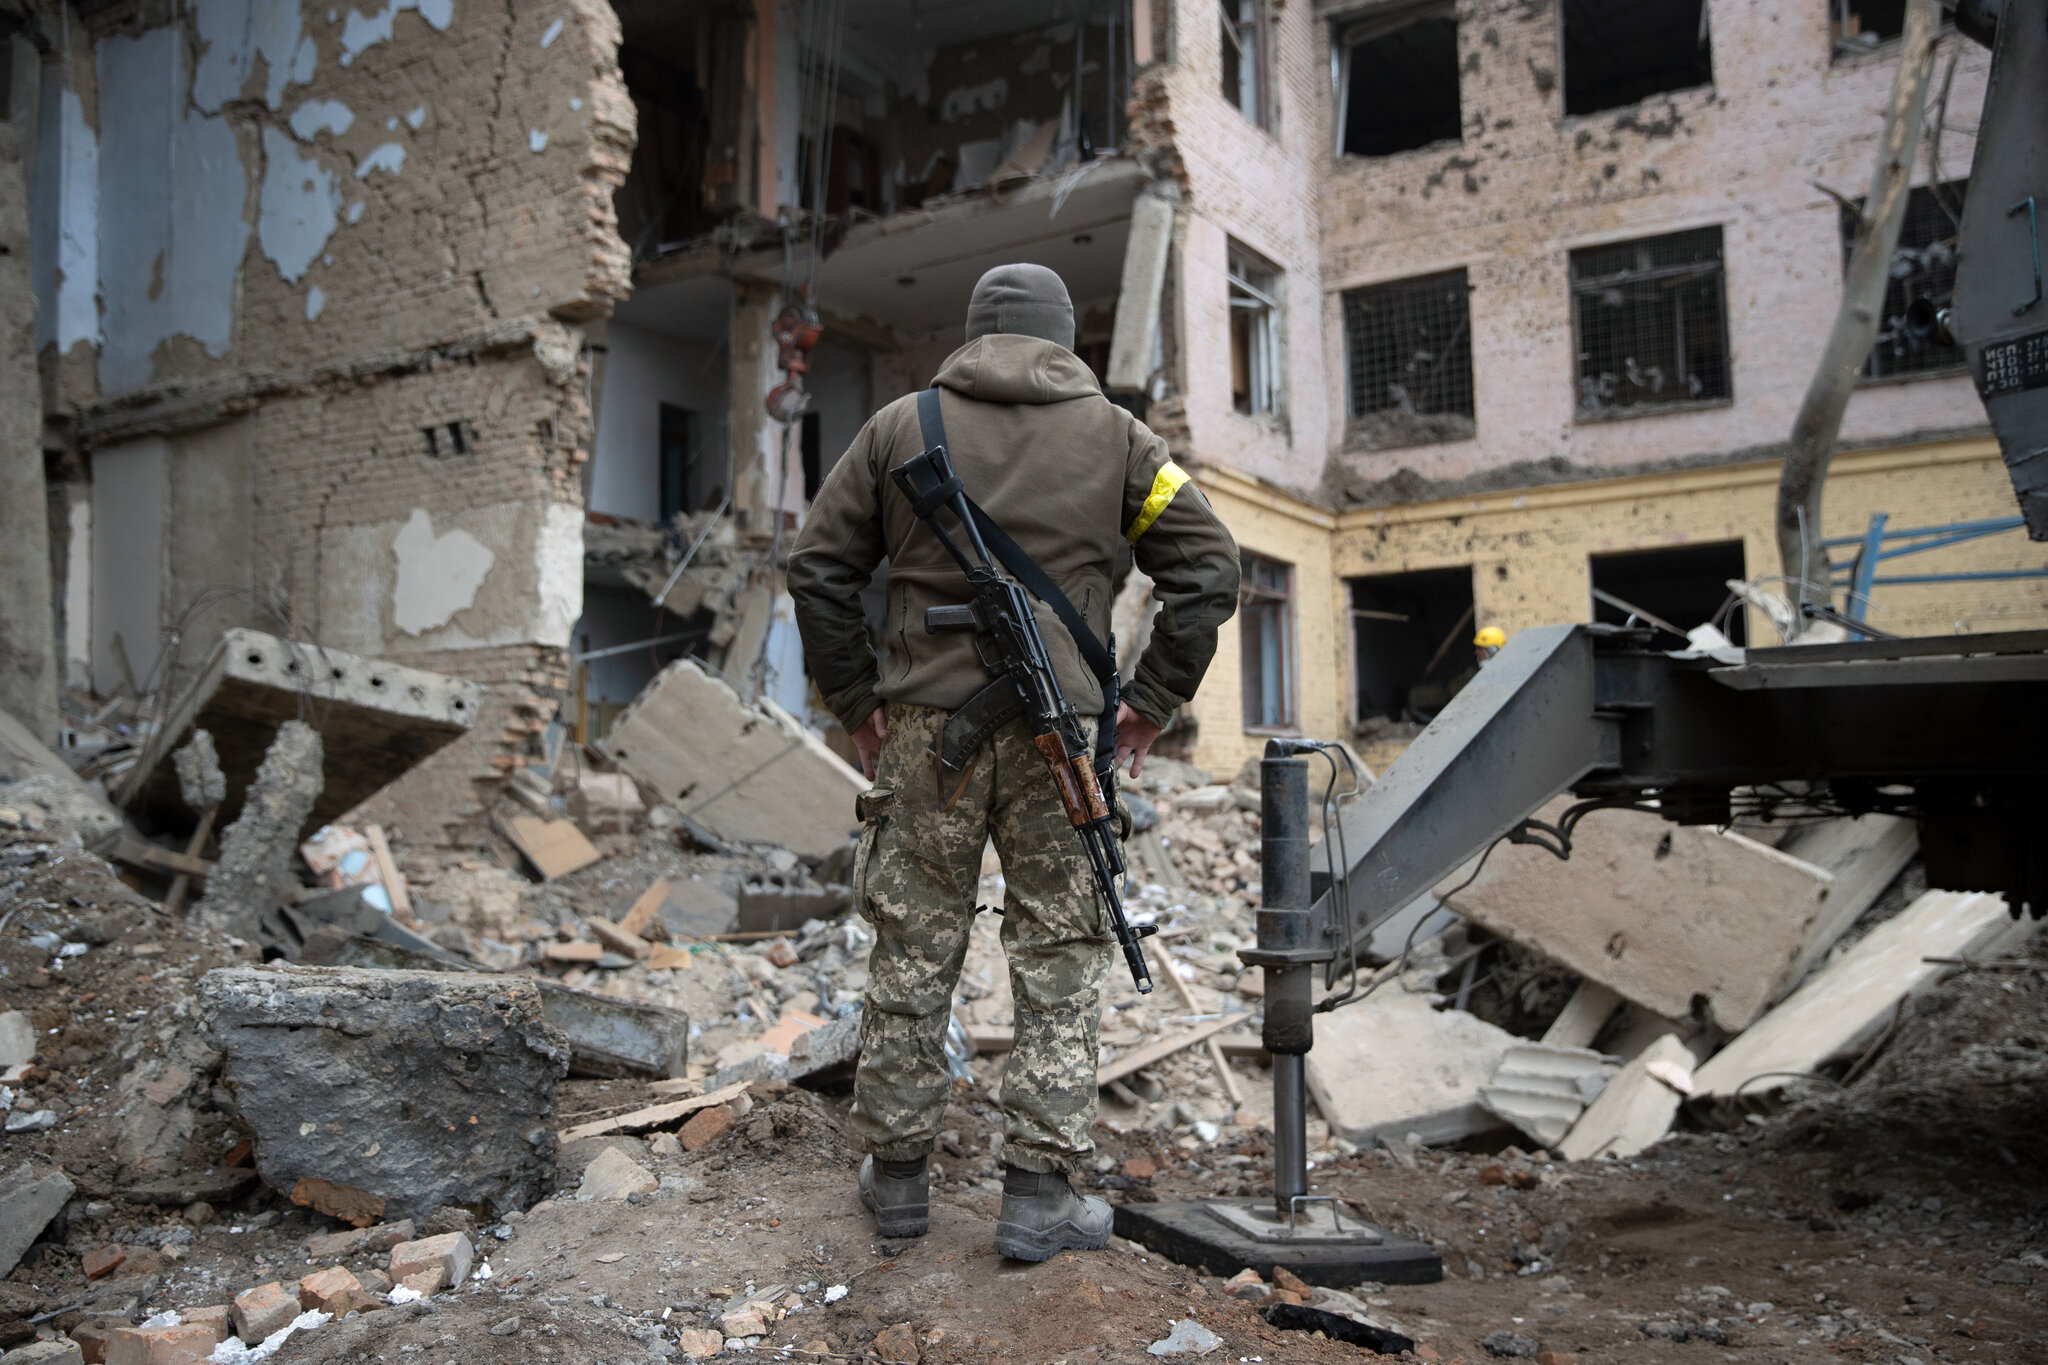 Russia-Ukraine War: Several explosions in Ukraine’s capital Kyiv, drones used in latest attacks